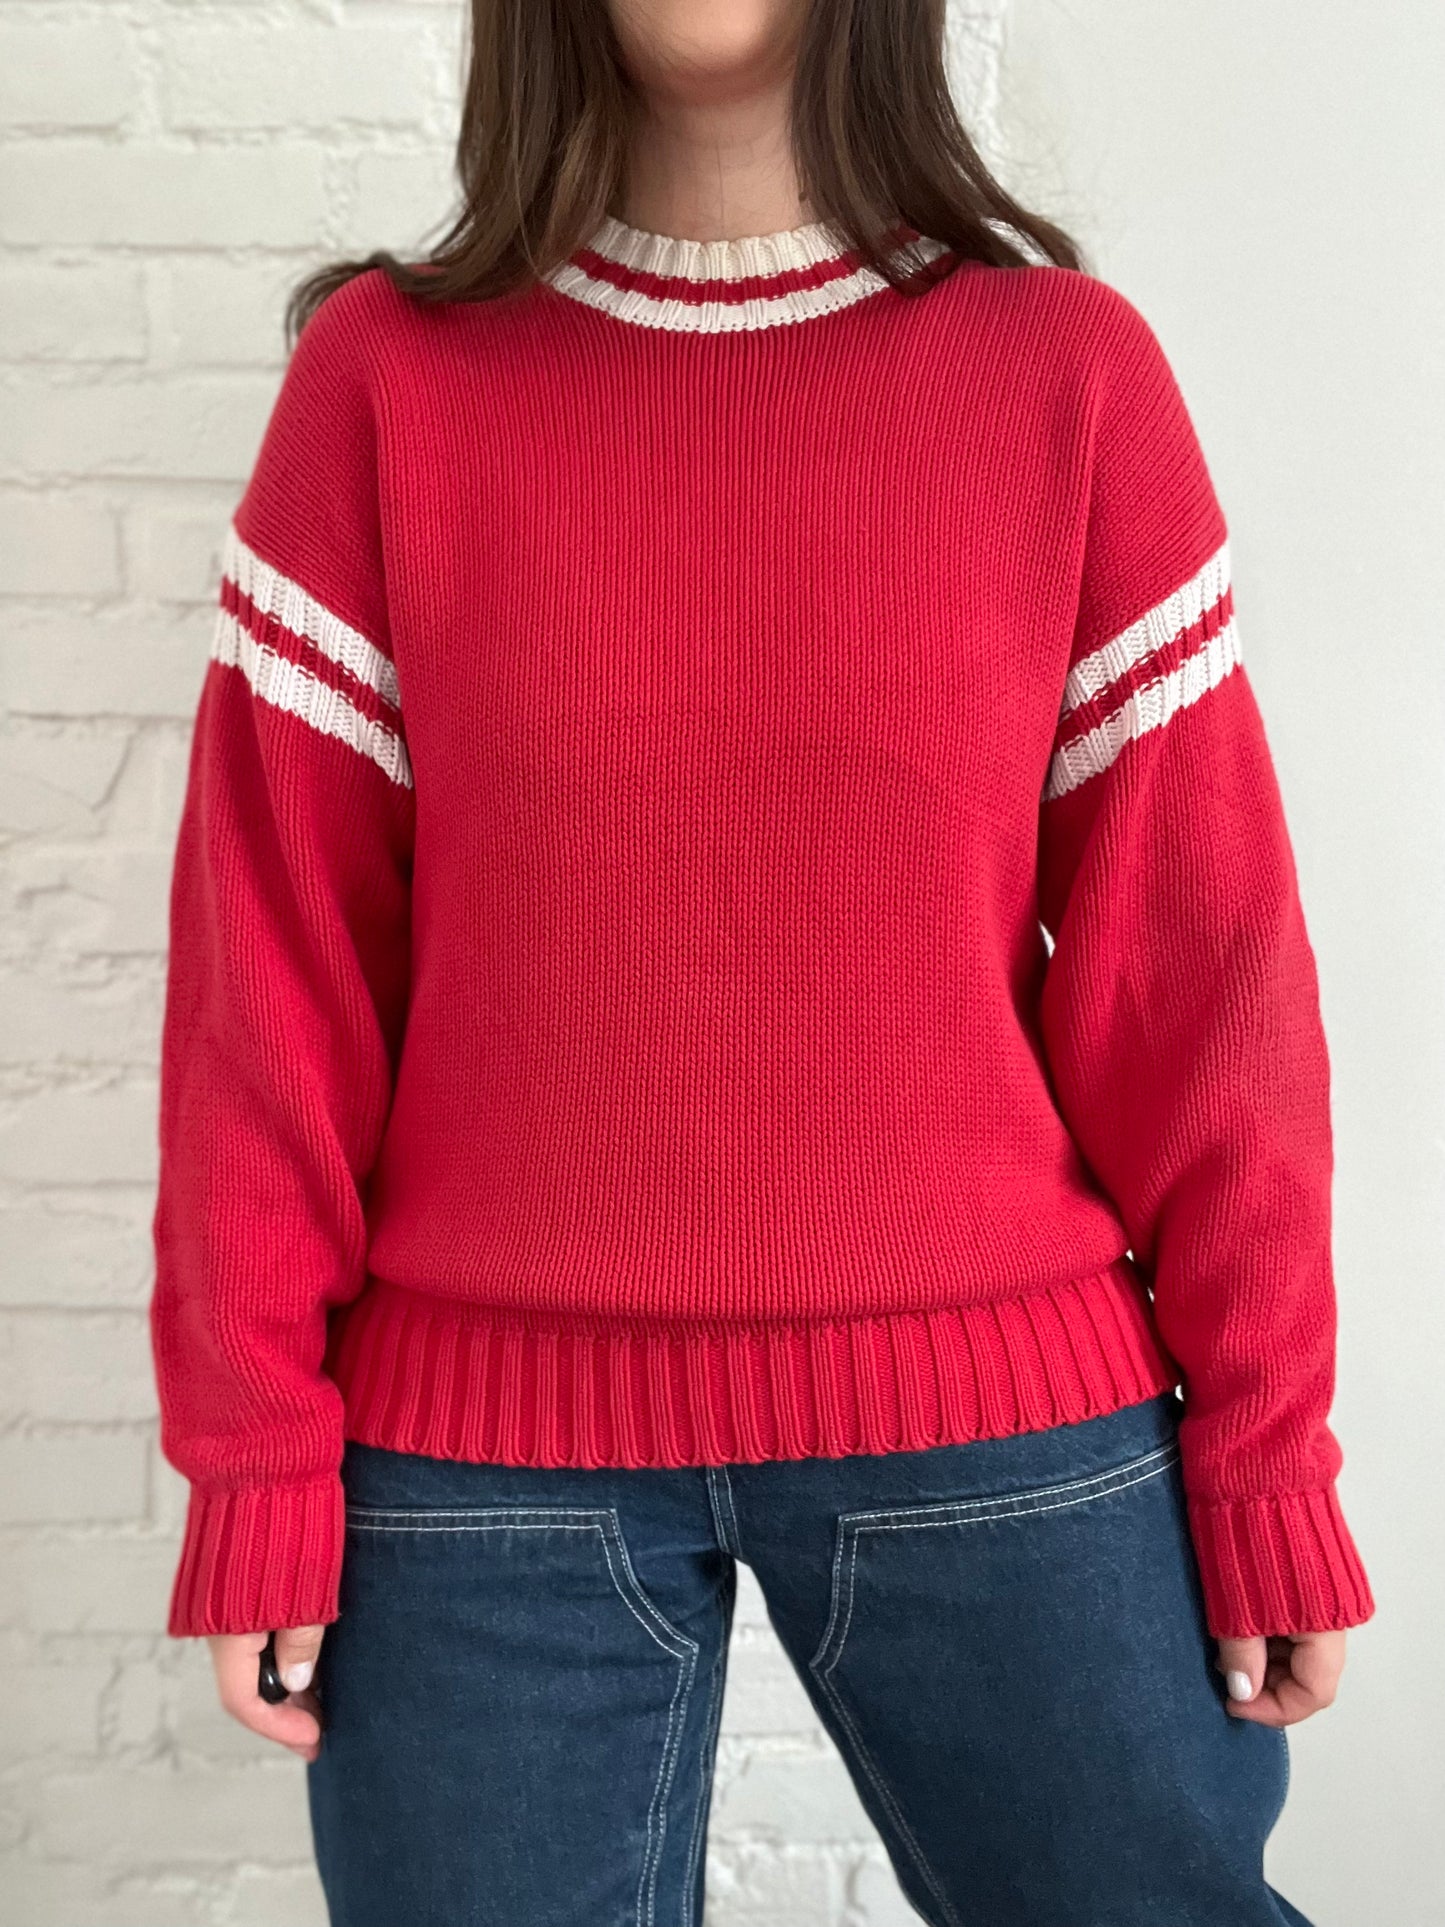 Vintage Rugby Gap Sweater - L